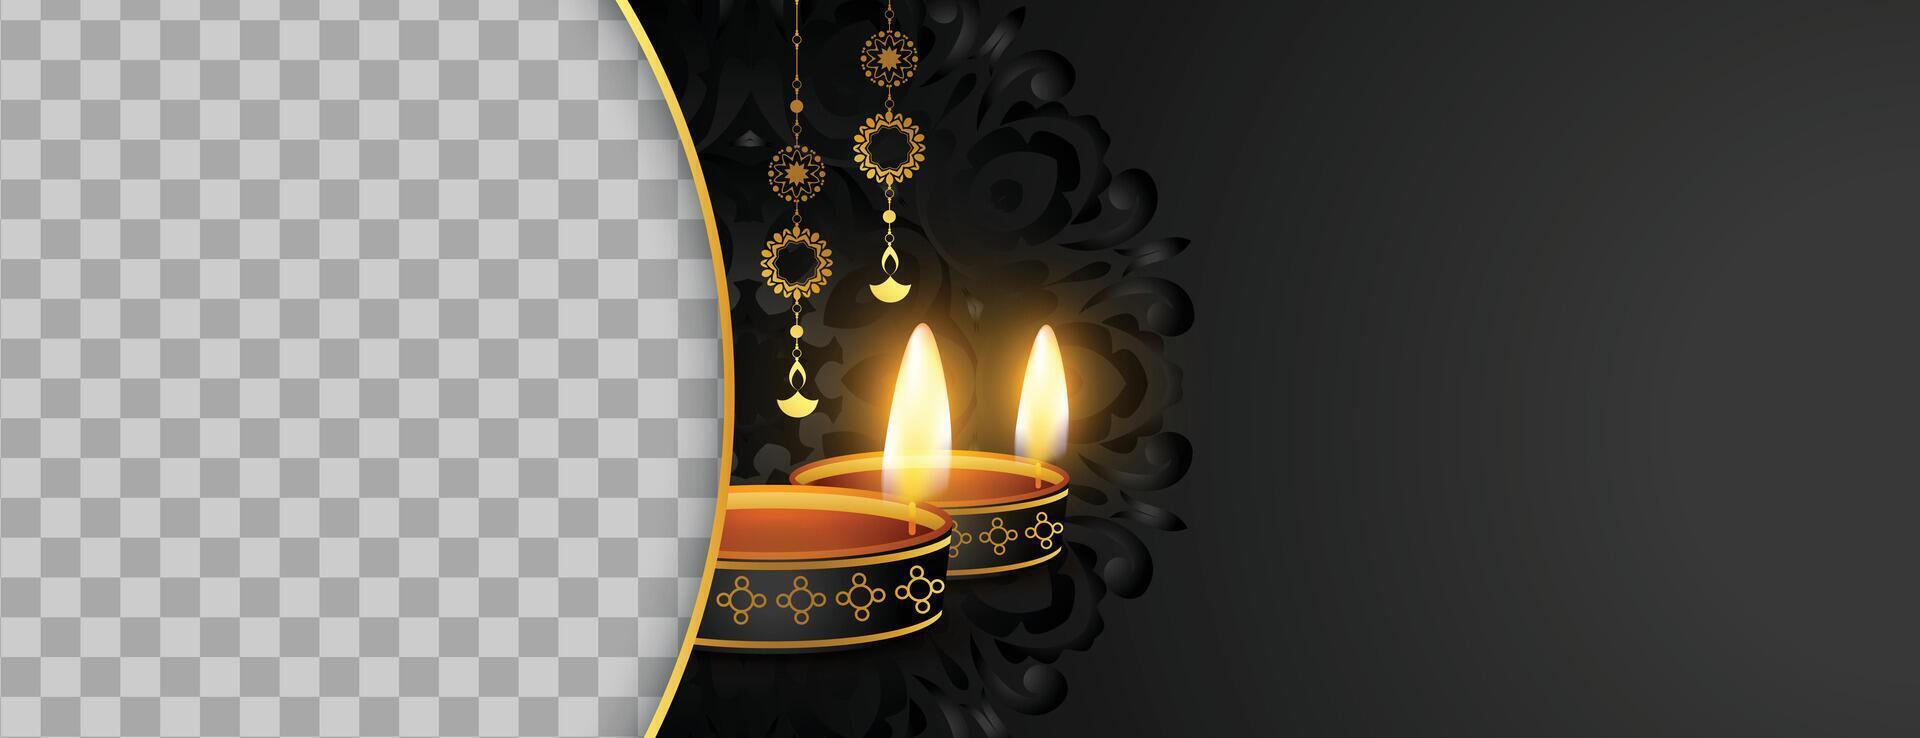 happy diwali premium banner with image space vector